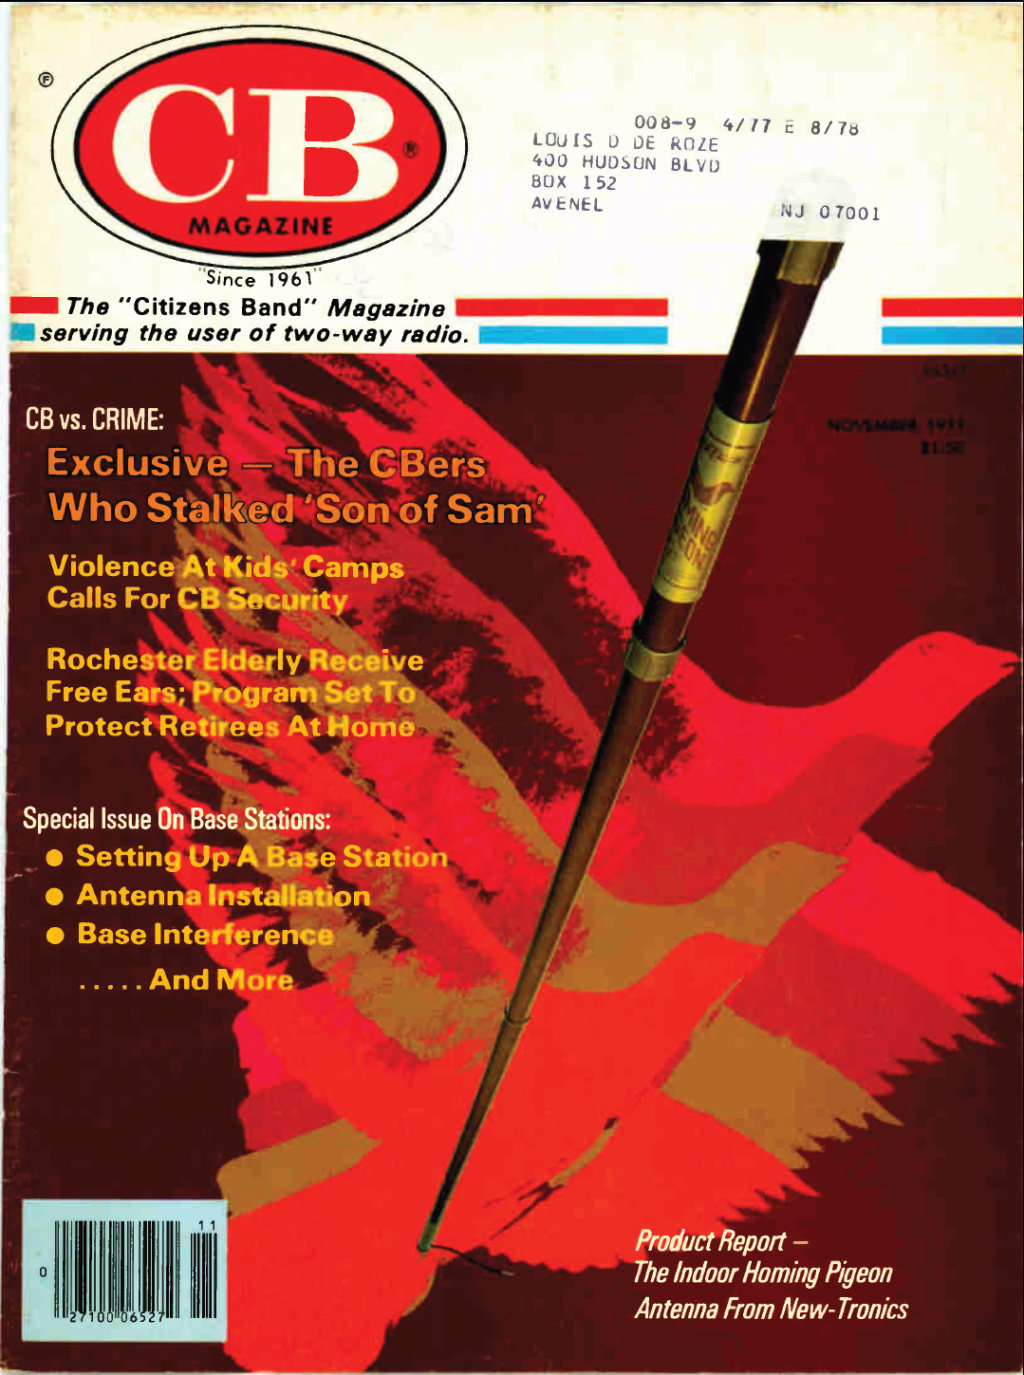 CB Magazine (Magazine (GB) Capt1341